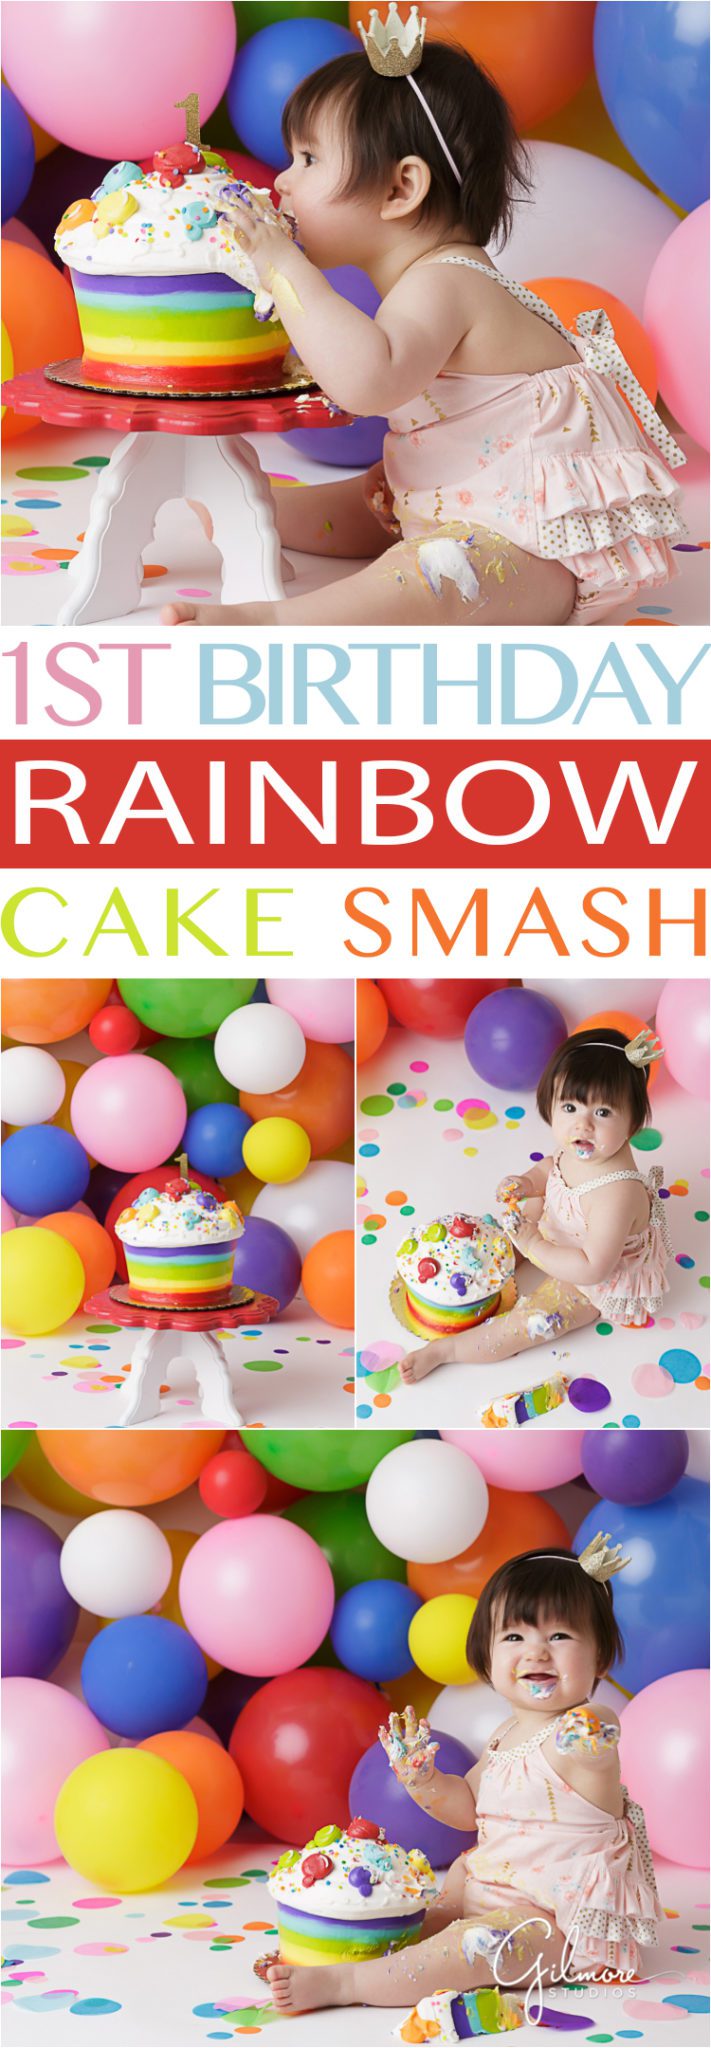 1st birthday cake smash photographer